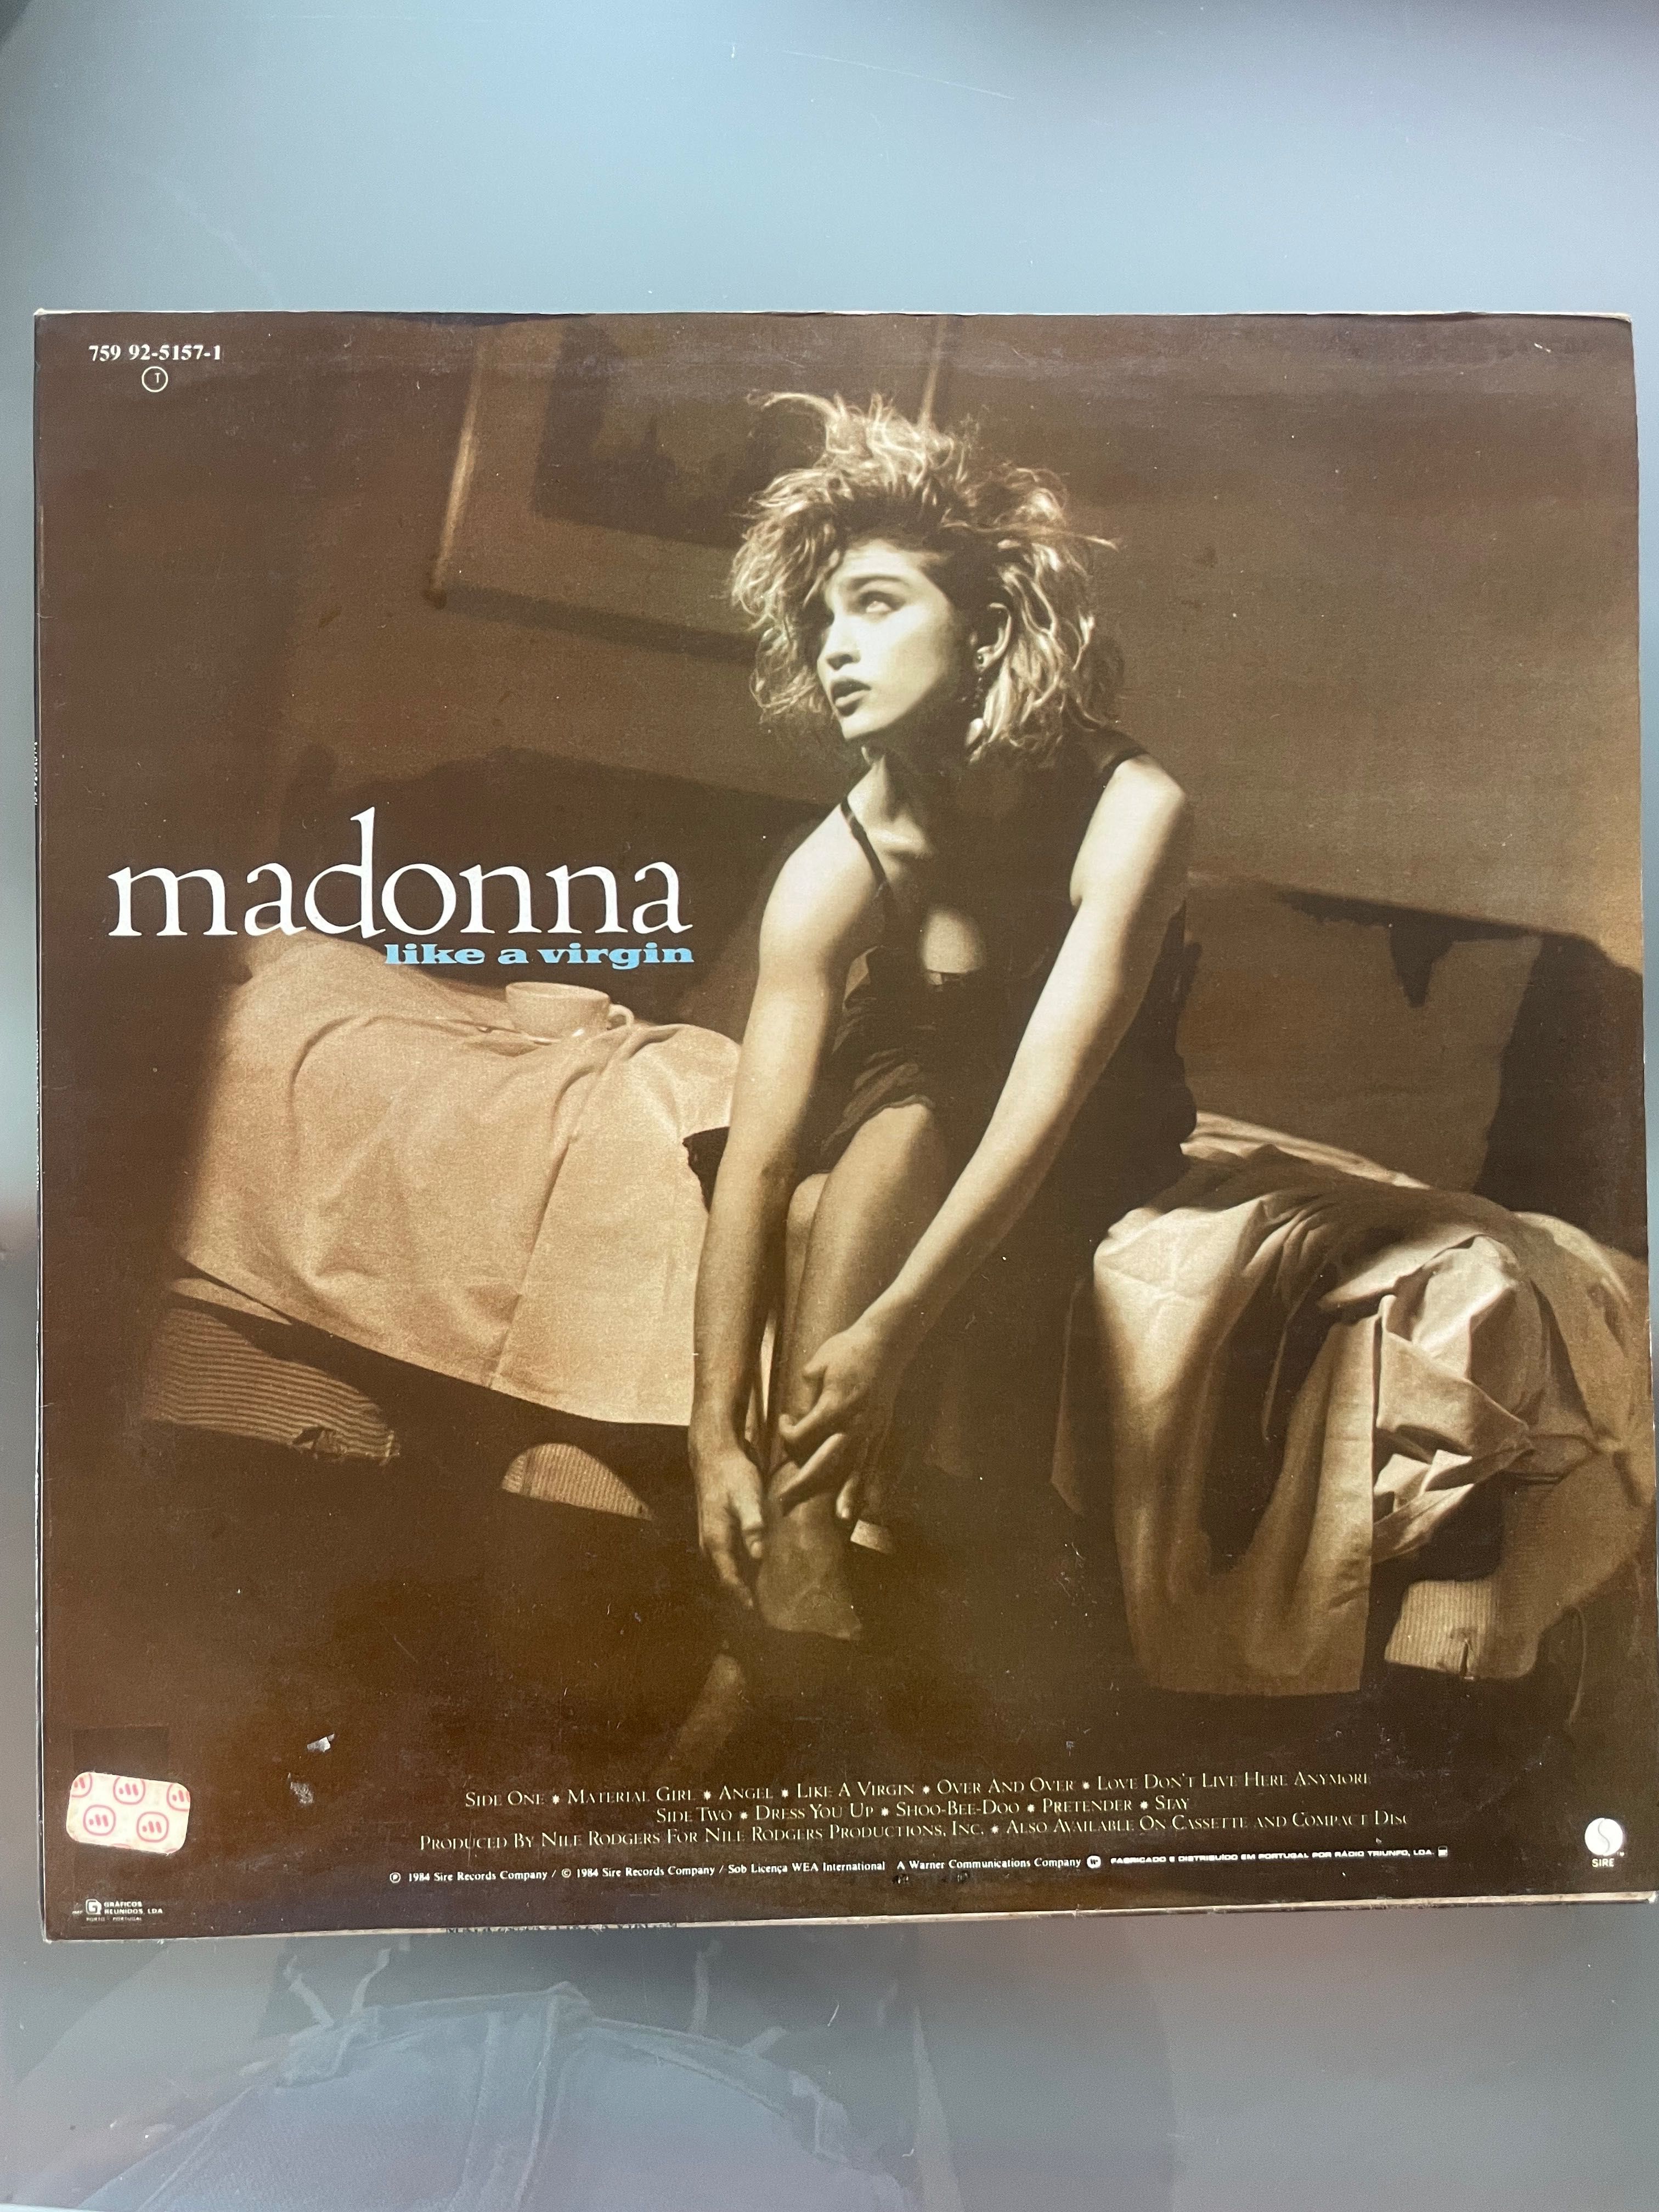 Disco vinil da Madonna